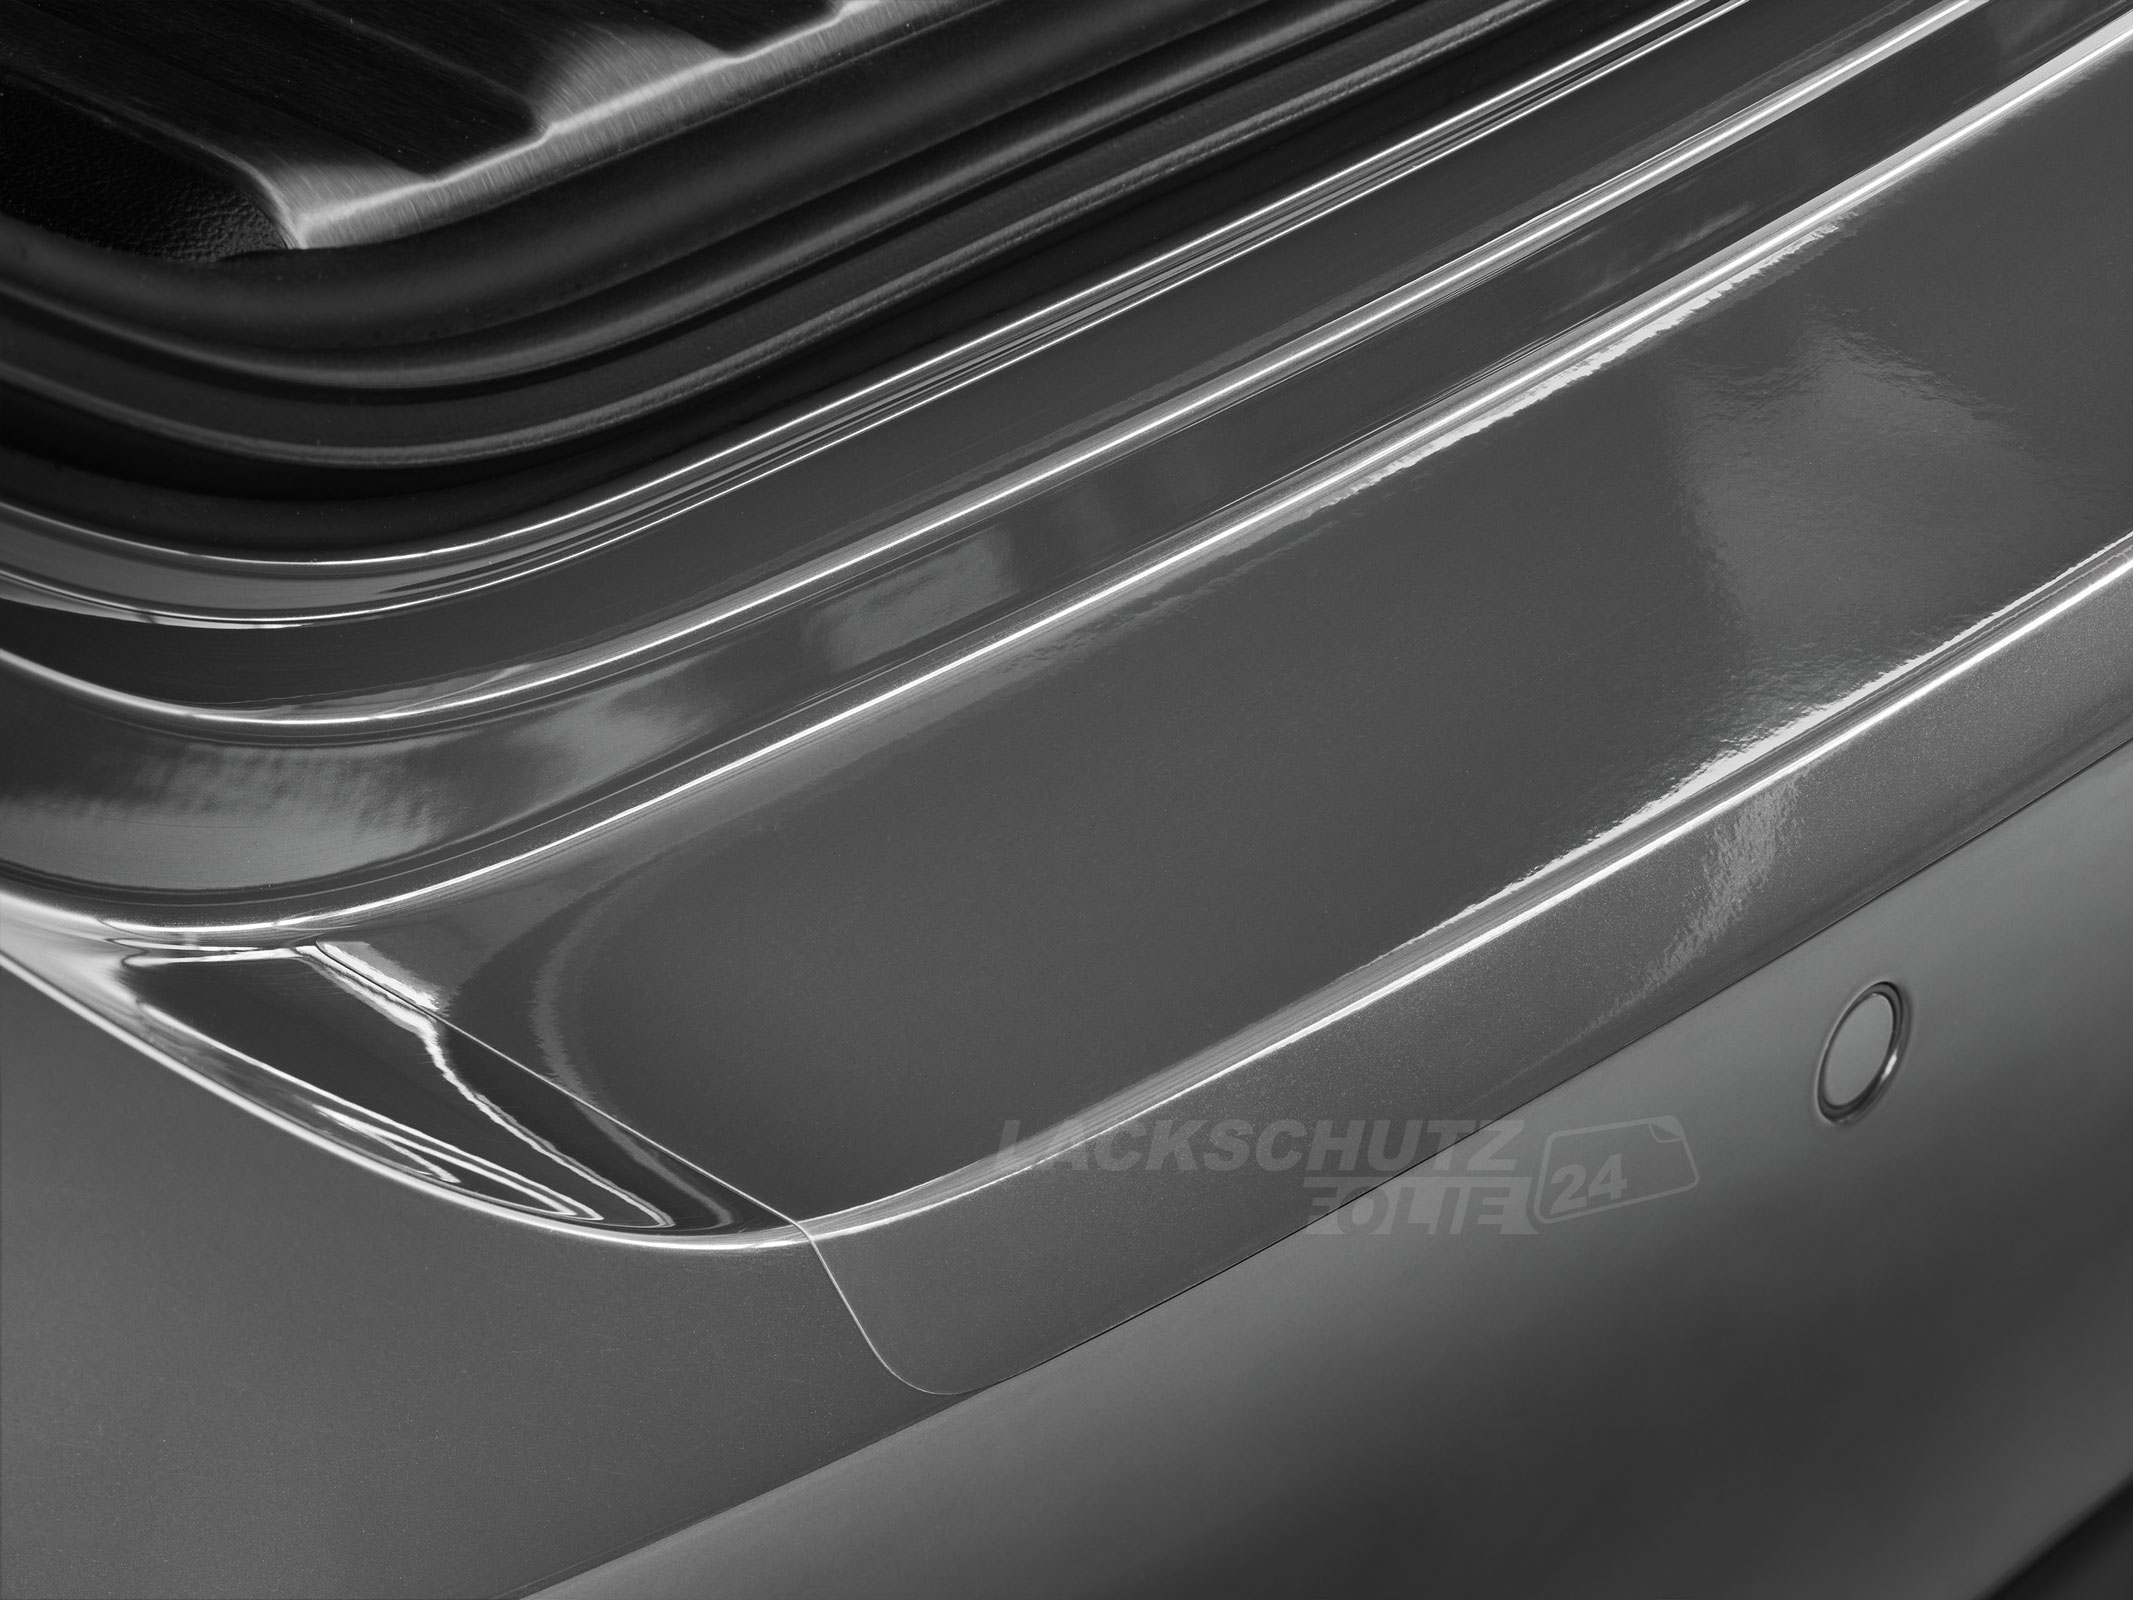 Ladekantenschutzfolie - Transparent Glatt Hochglänzend 240 µm stark für Daihatsu Materia ab BJ 2007